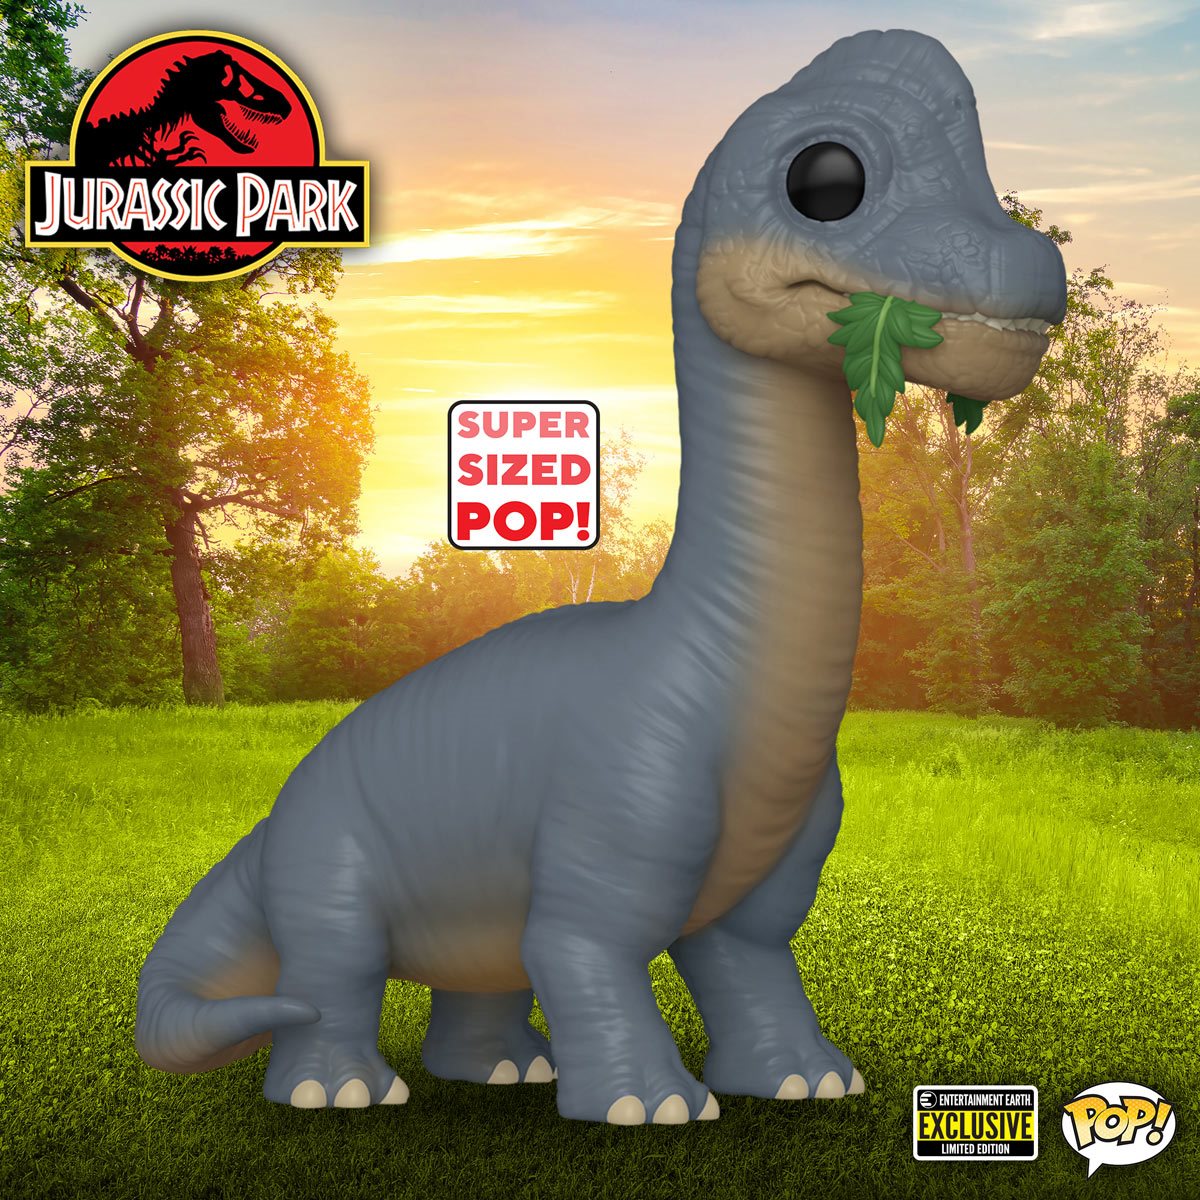 Jurassic Park Action Figures, Statues, Funko Pops